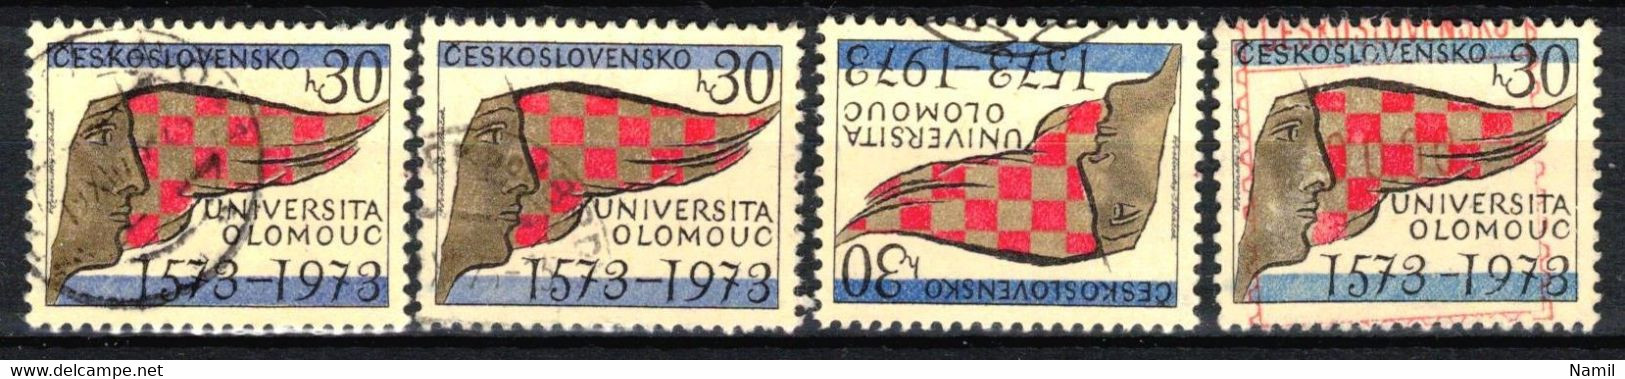 Tchécoslovaquie 1973 Mi 2153 (Yv 1992), Obliteré, Couler Bleu Diff. - Errors, Freaks & Oddities (EFO)